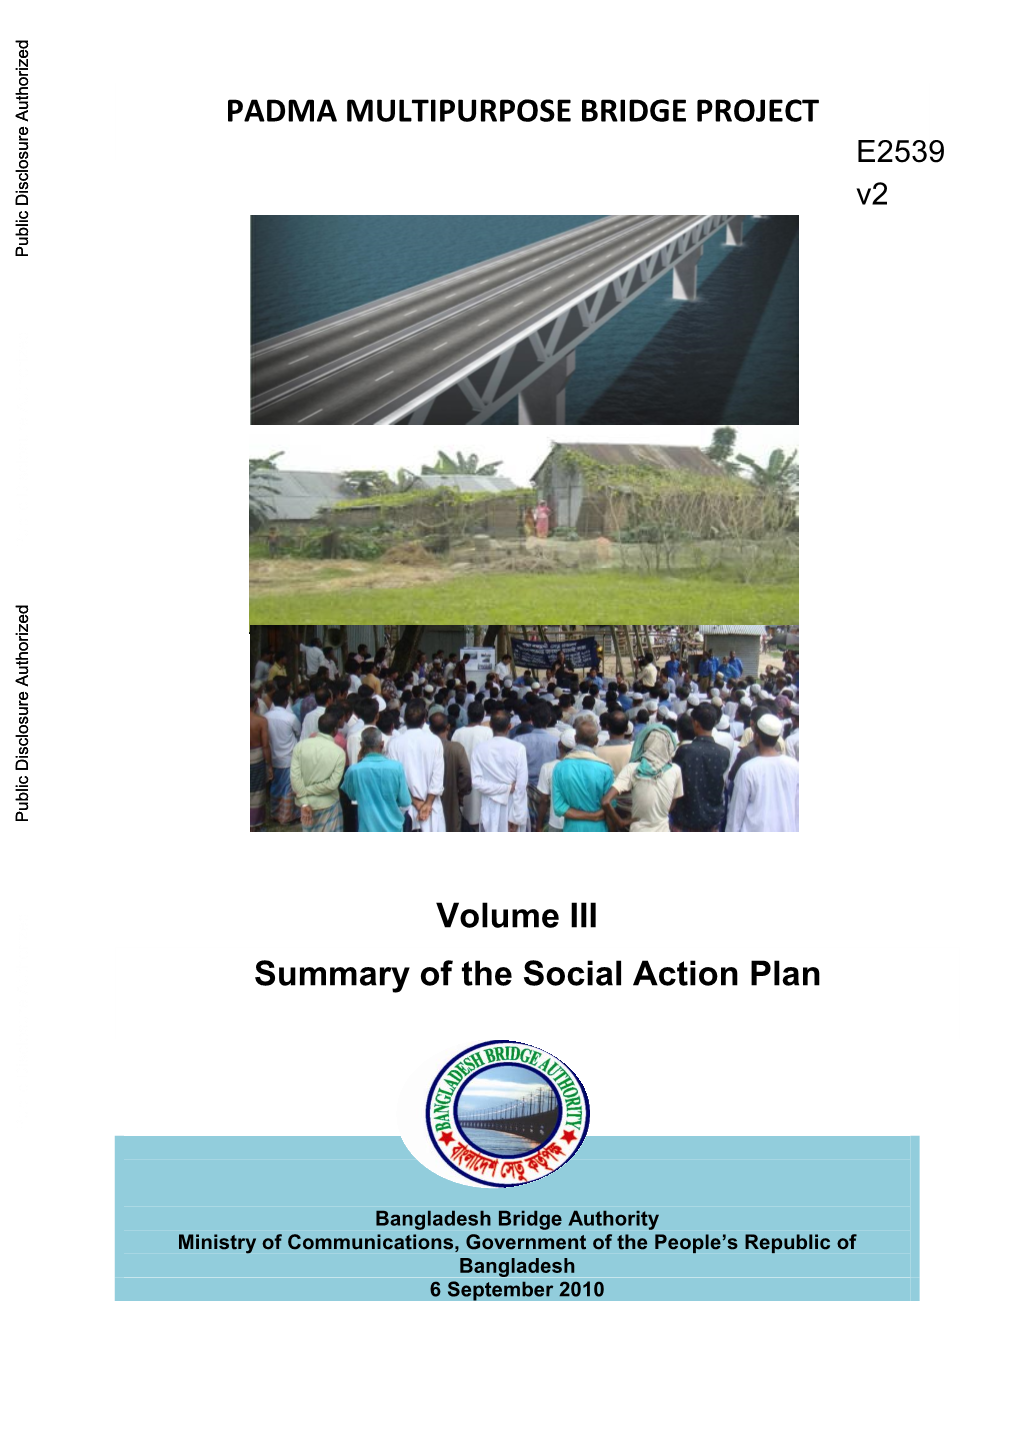 PADMA MULTIPURPOSE BRIDGE PROJECT Summary of the Social